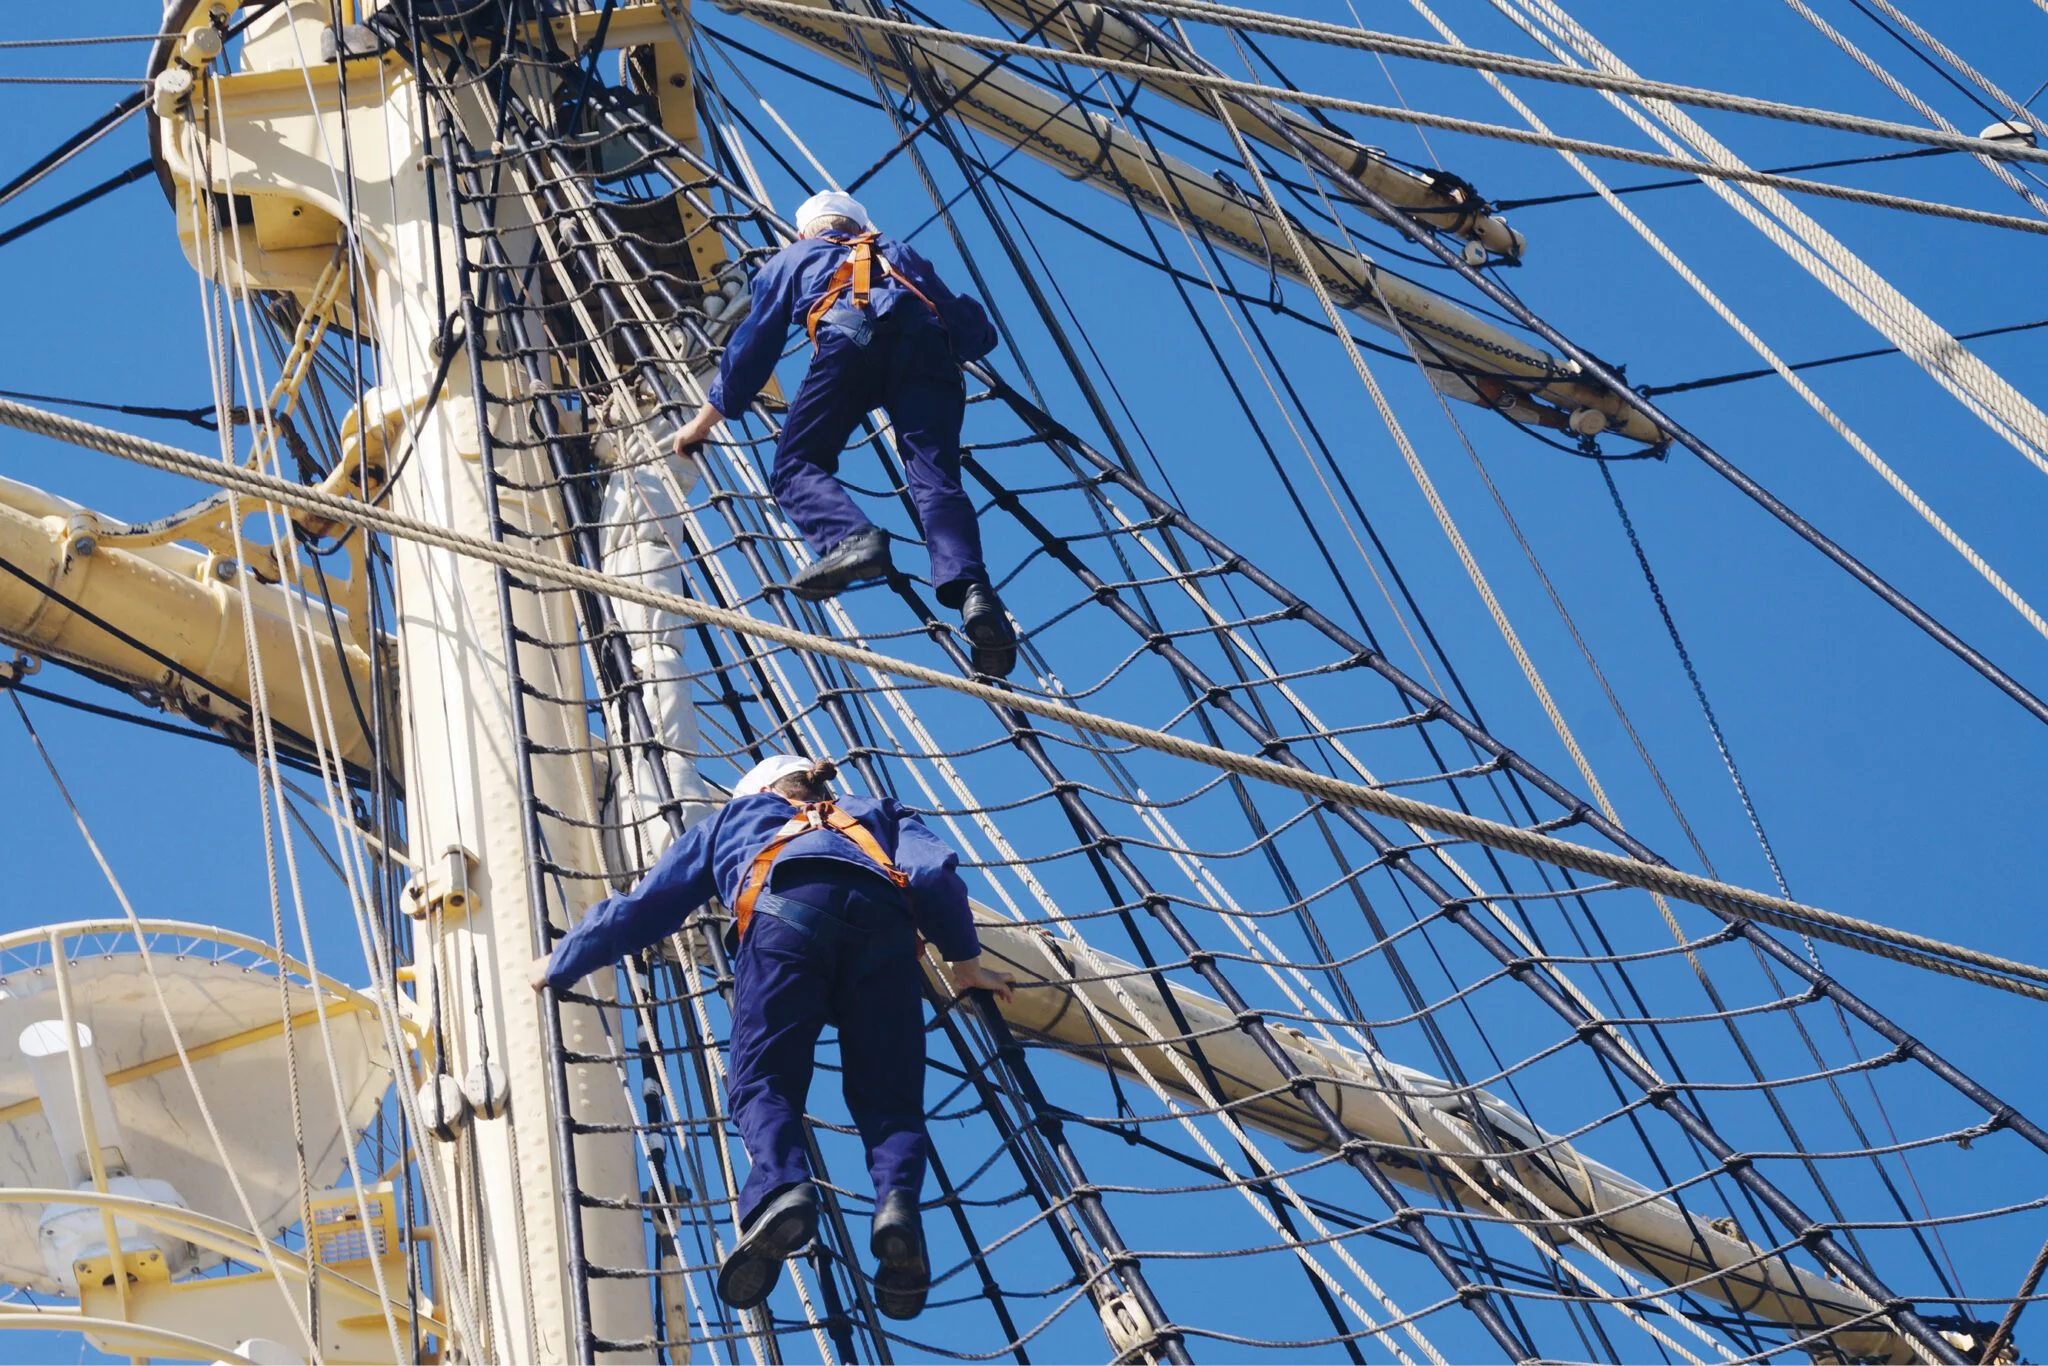 Two sailors climbing up the sail net